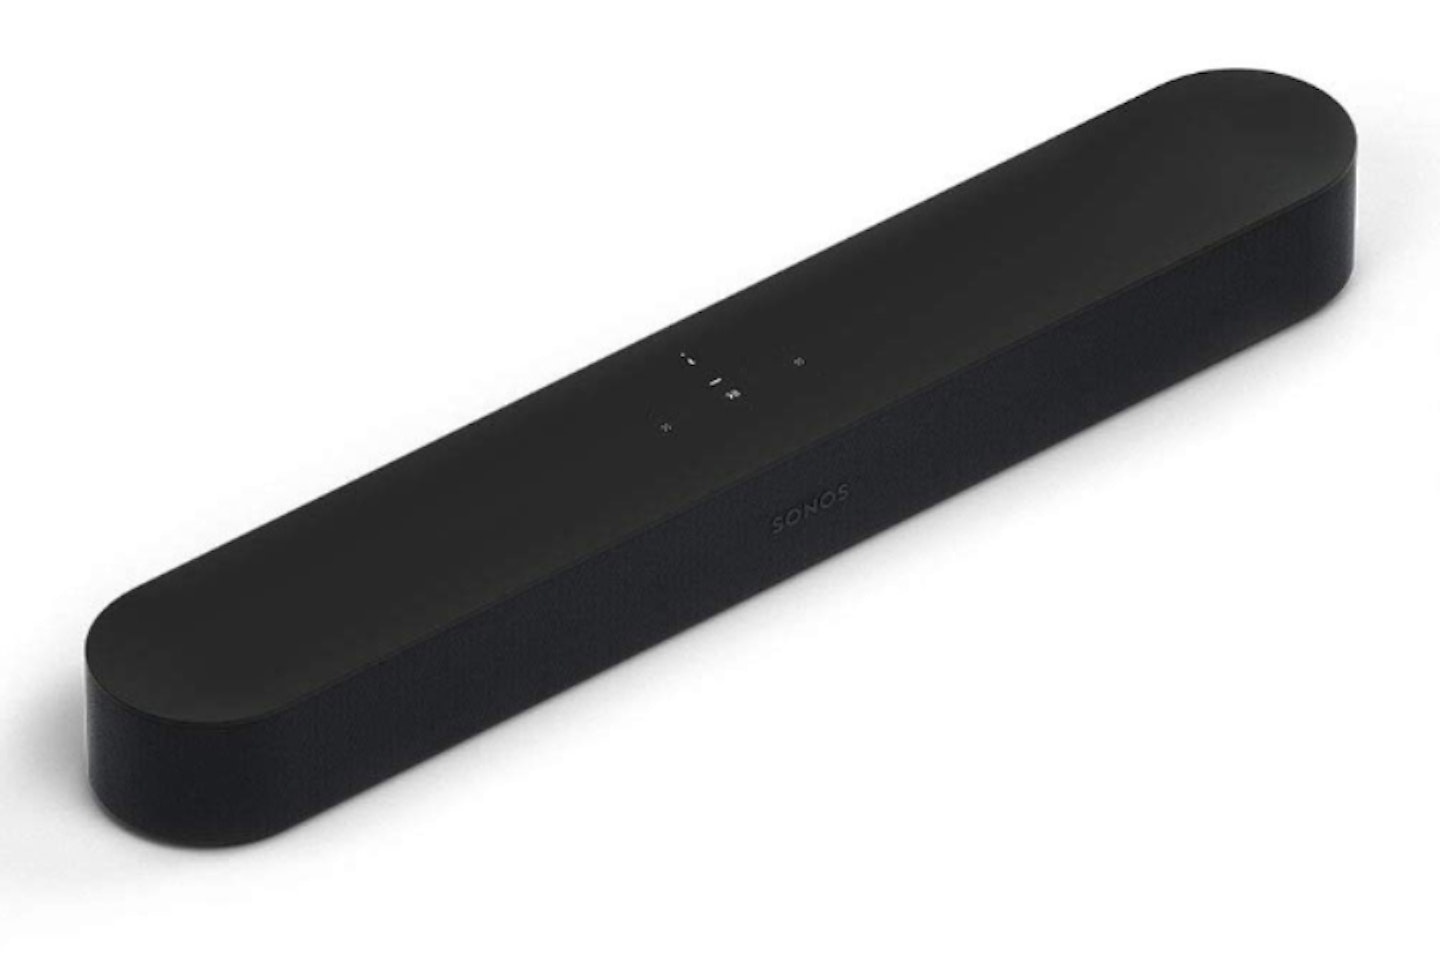 Sonos Beam Compact Smart Soundbar with Amazon Alexa Voice Control